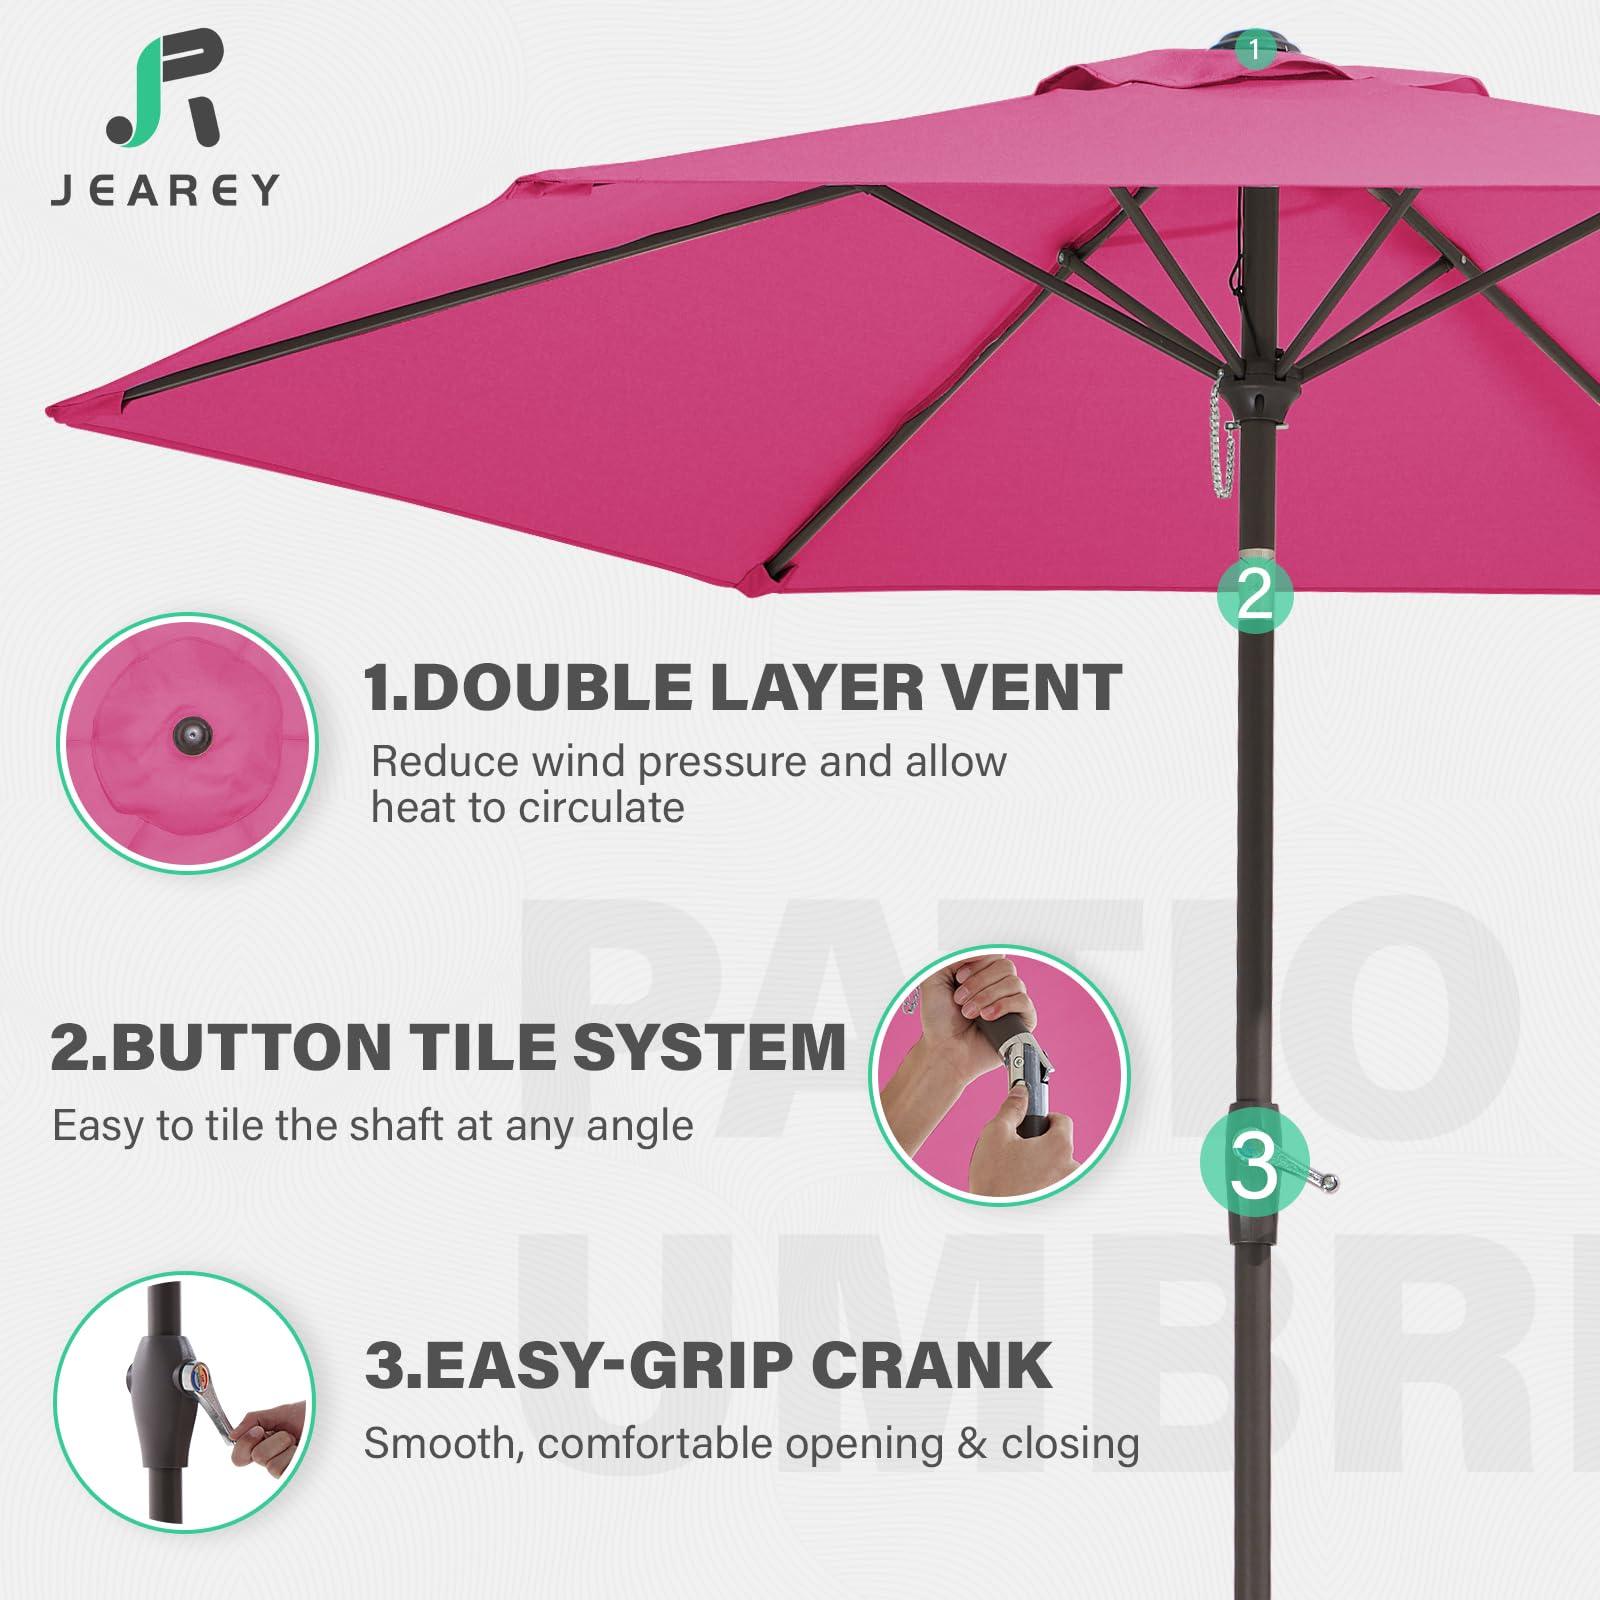 JEAREY 7.5FT Patio Umbrella Market Table Umbrella with 6 Sturdy Ribs, Push Button Tilt/Crank Outdoor Umbrella for Garden, Deck, Backyard, Pool and Beach,Rose Pink - CookCave